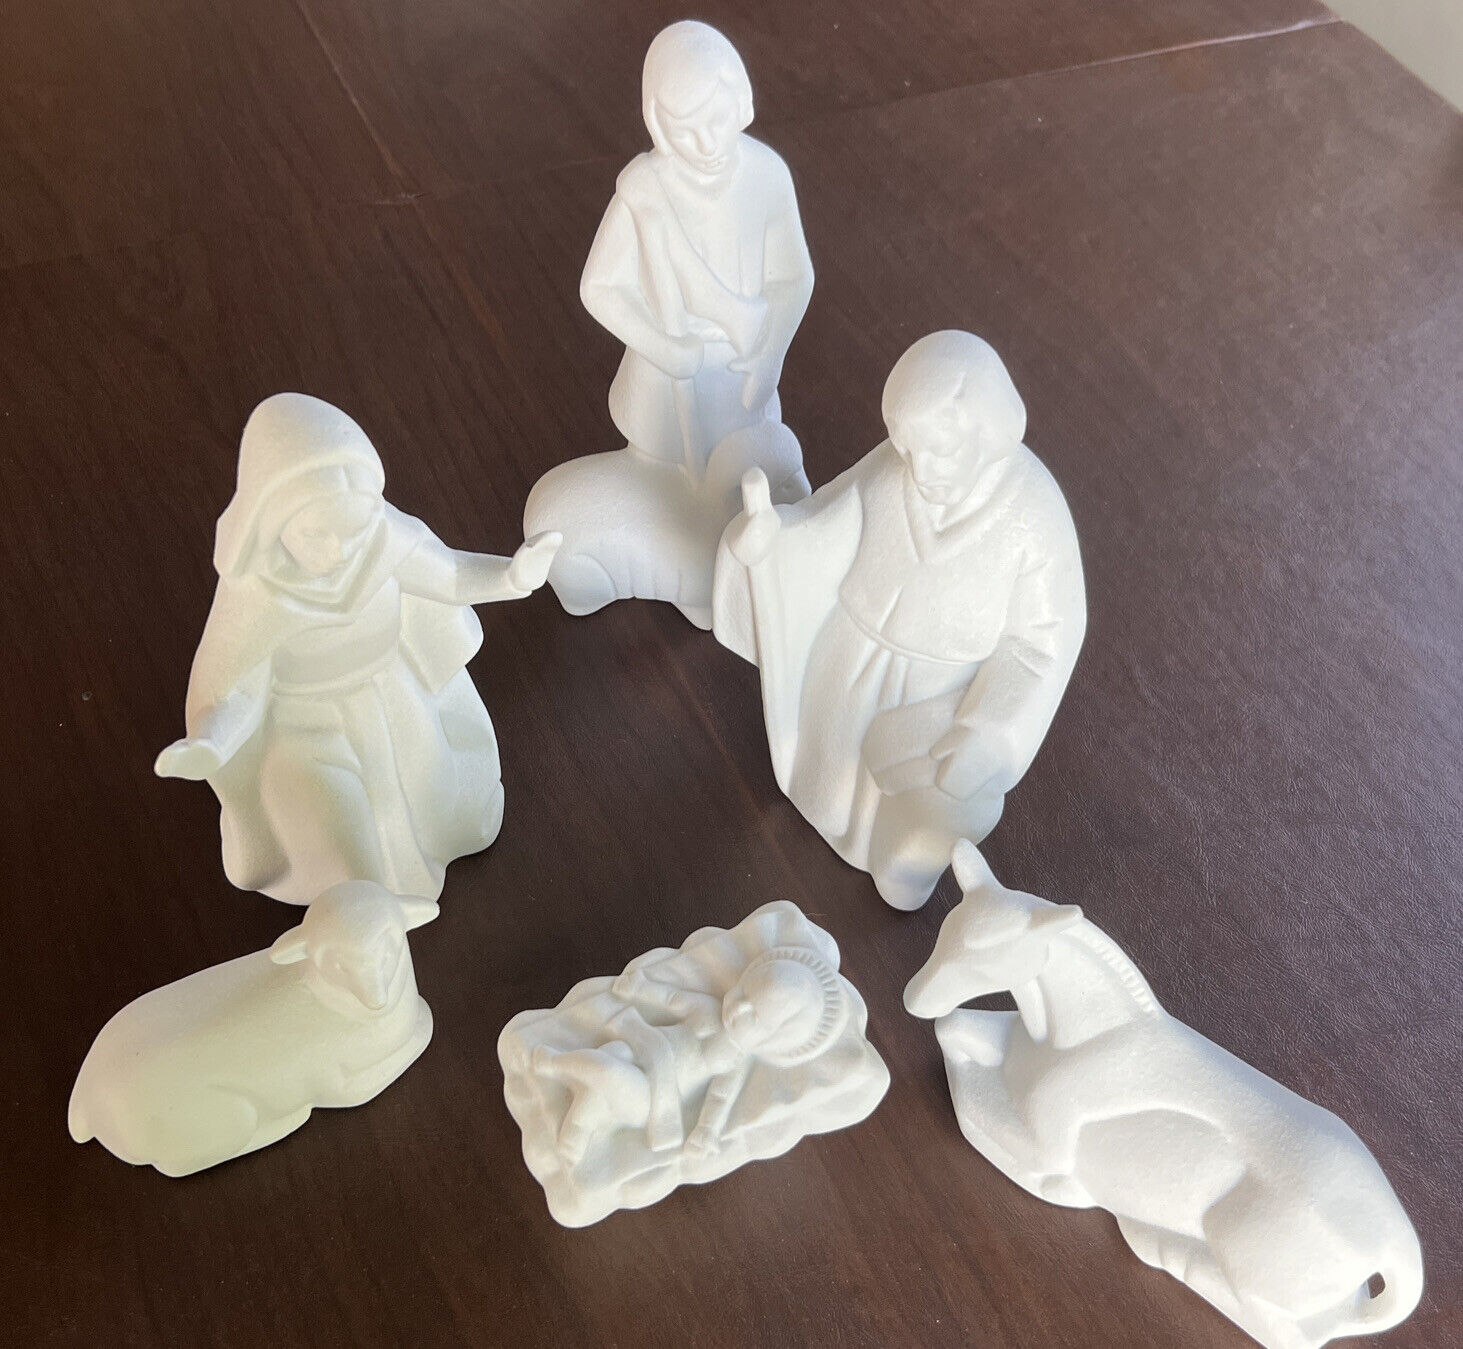 Nativity Scene Ceramic Tallest Figure Over 8” Stunning Set